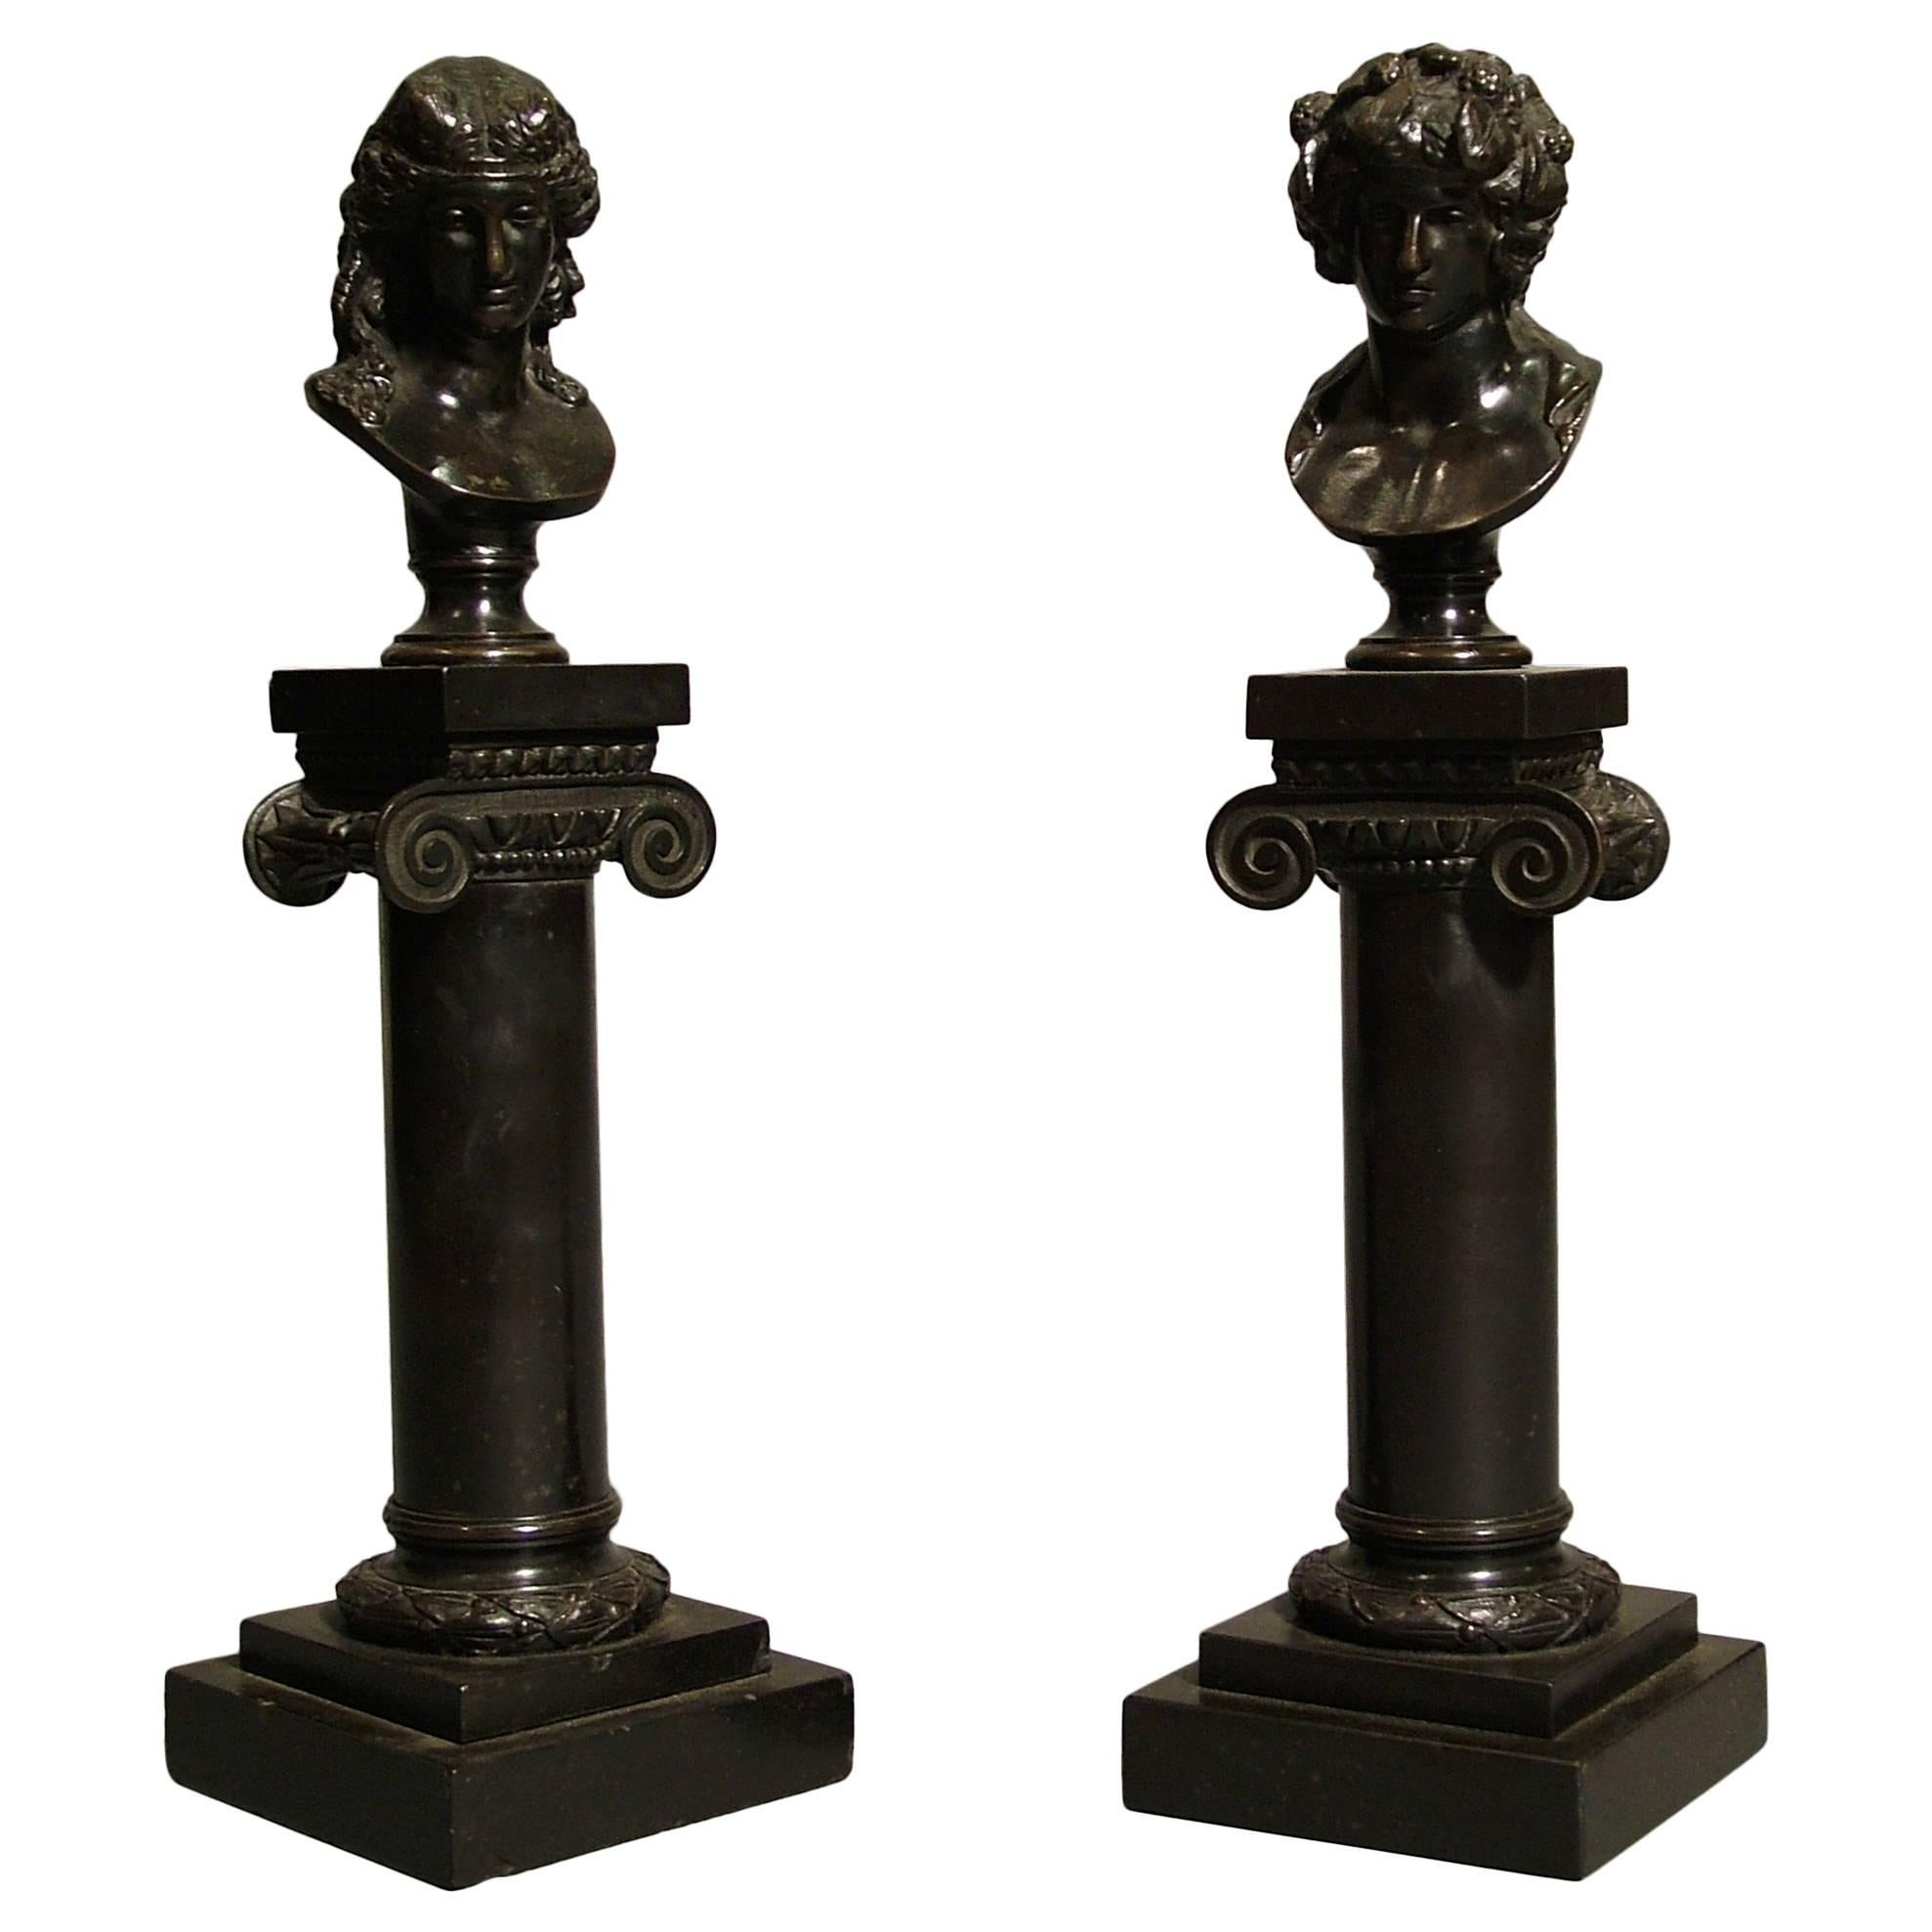 Pair of Antique Decorative Bronze Roman Busts on Columns